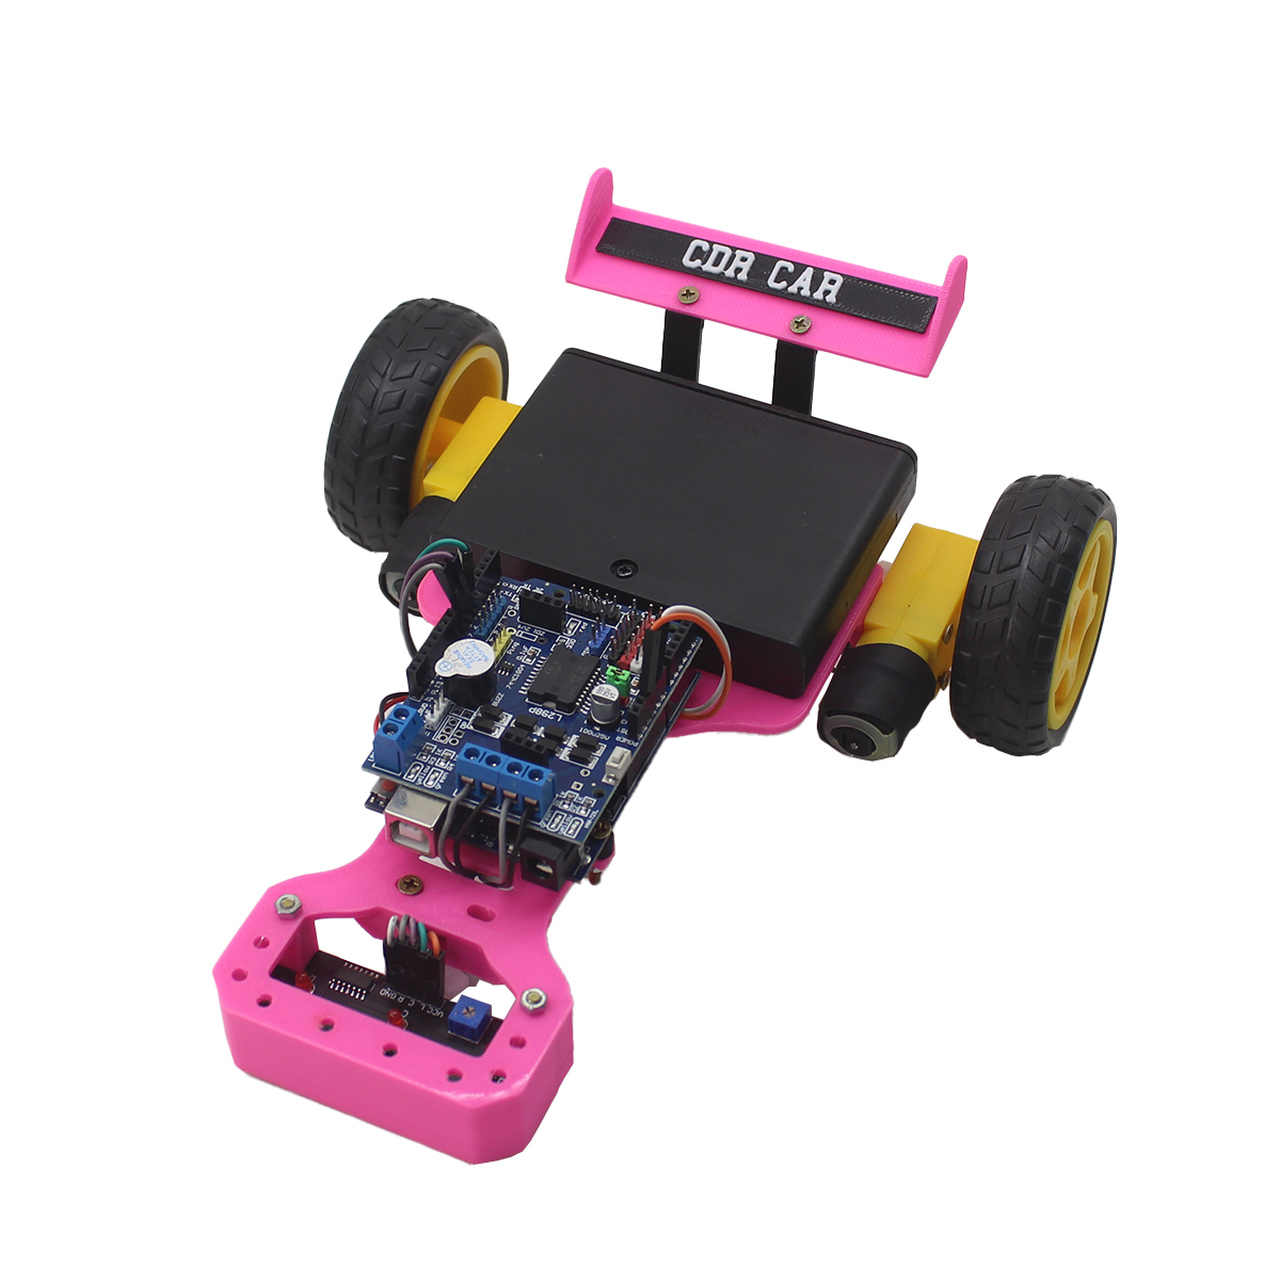 KIT para montar Robô Seguidor de Linha - CDR Car